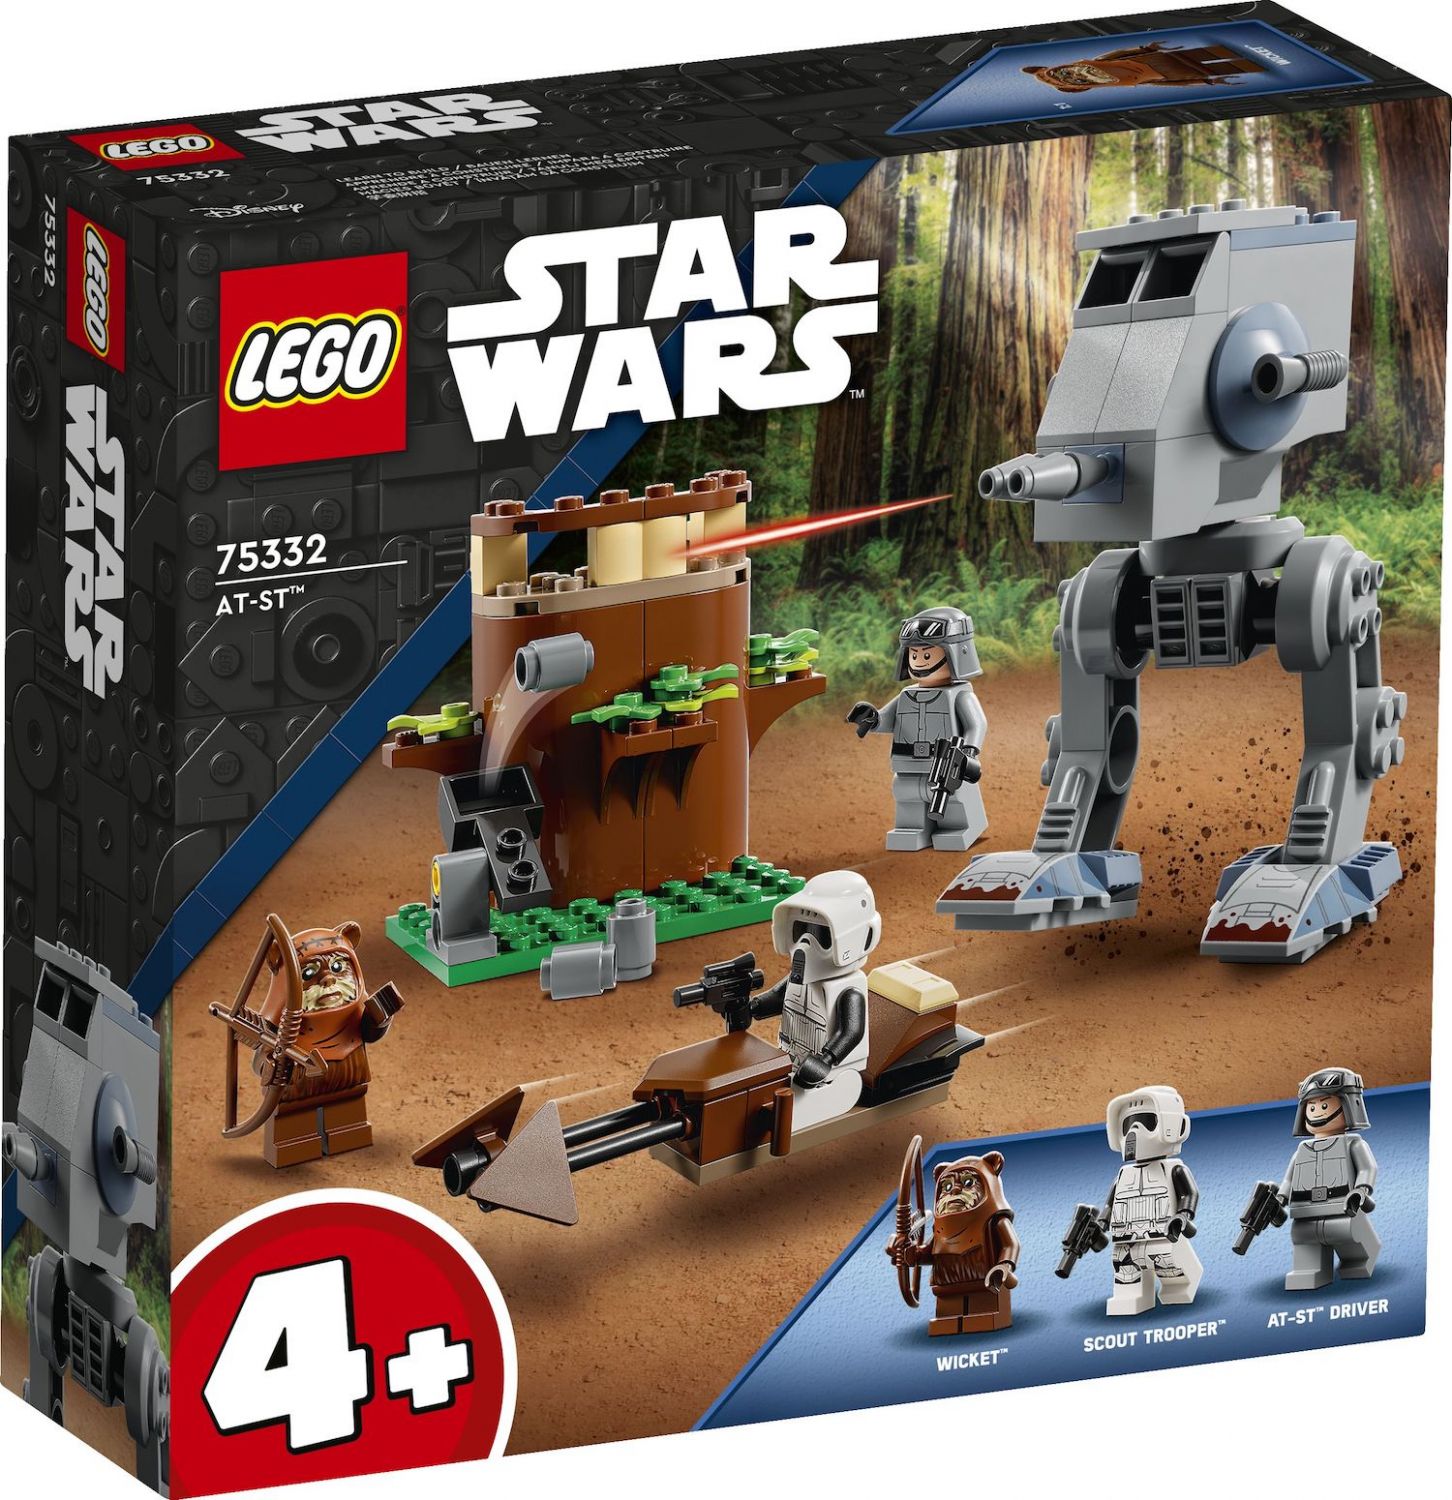 sende Hotel Gravere LEGO Star Wars 4+ AT-ST (75332) Revealed - The Brick Fan